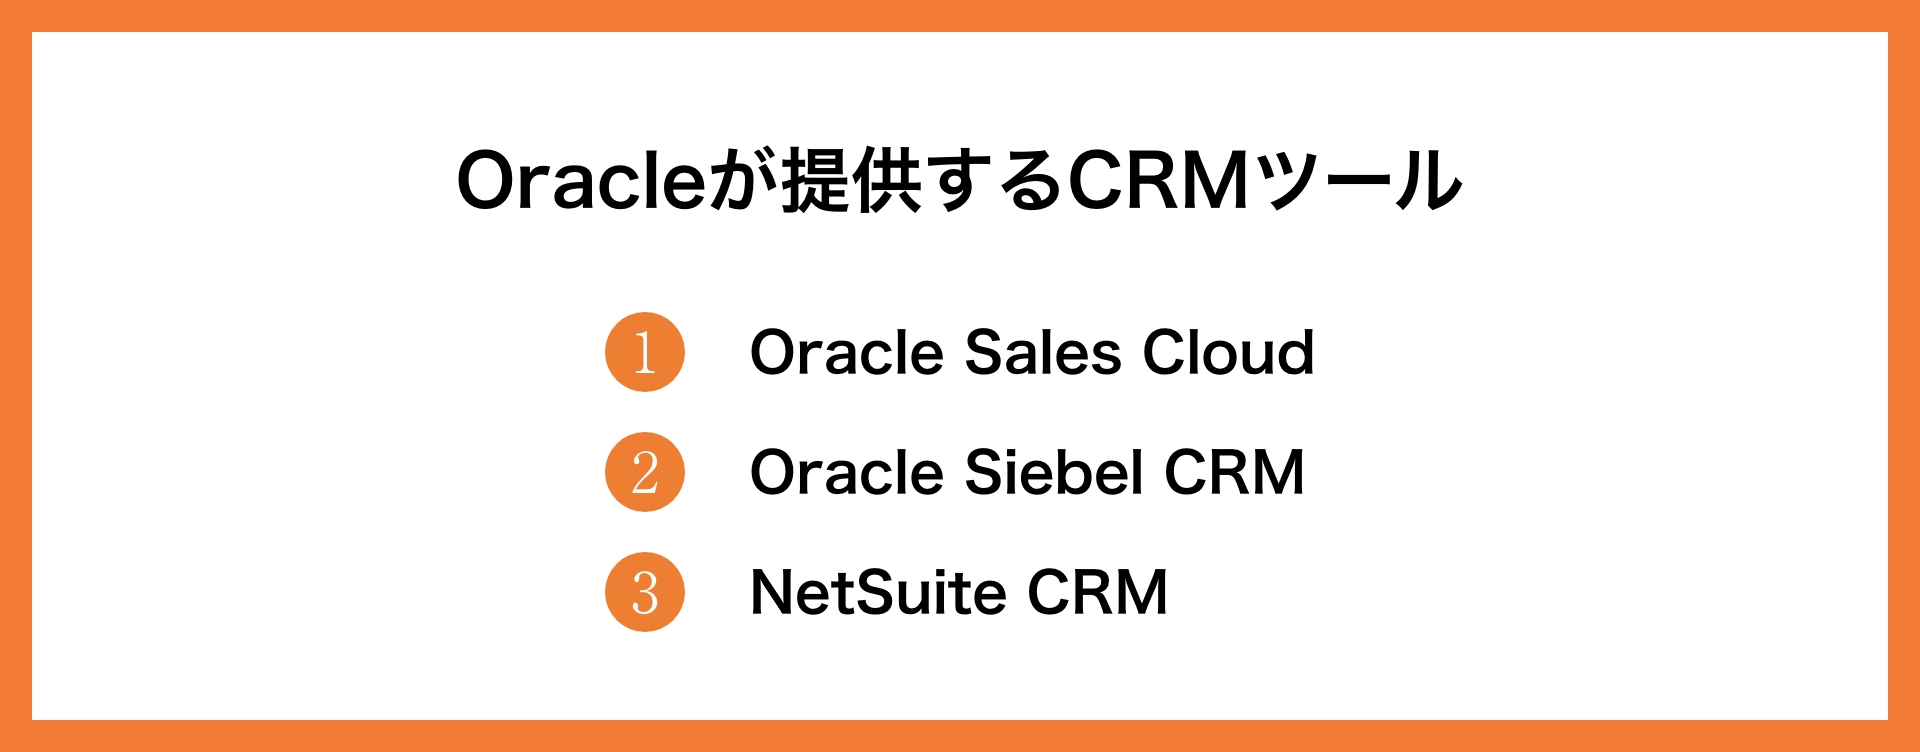 OracleのCRMツールについて徹底解説        _1